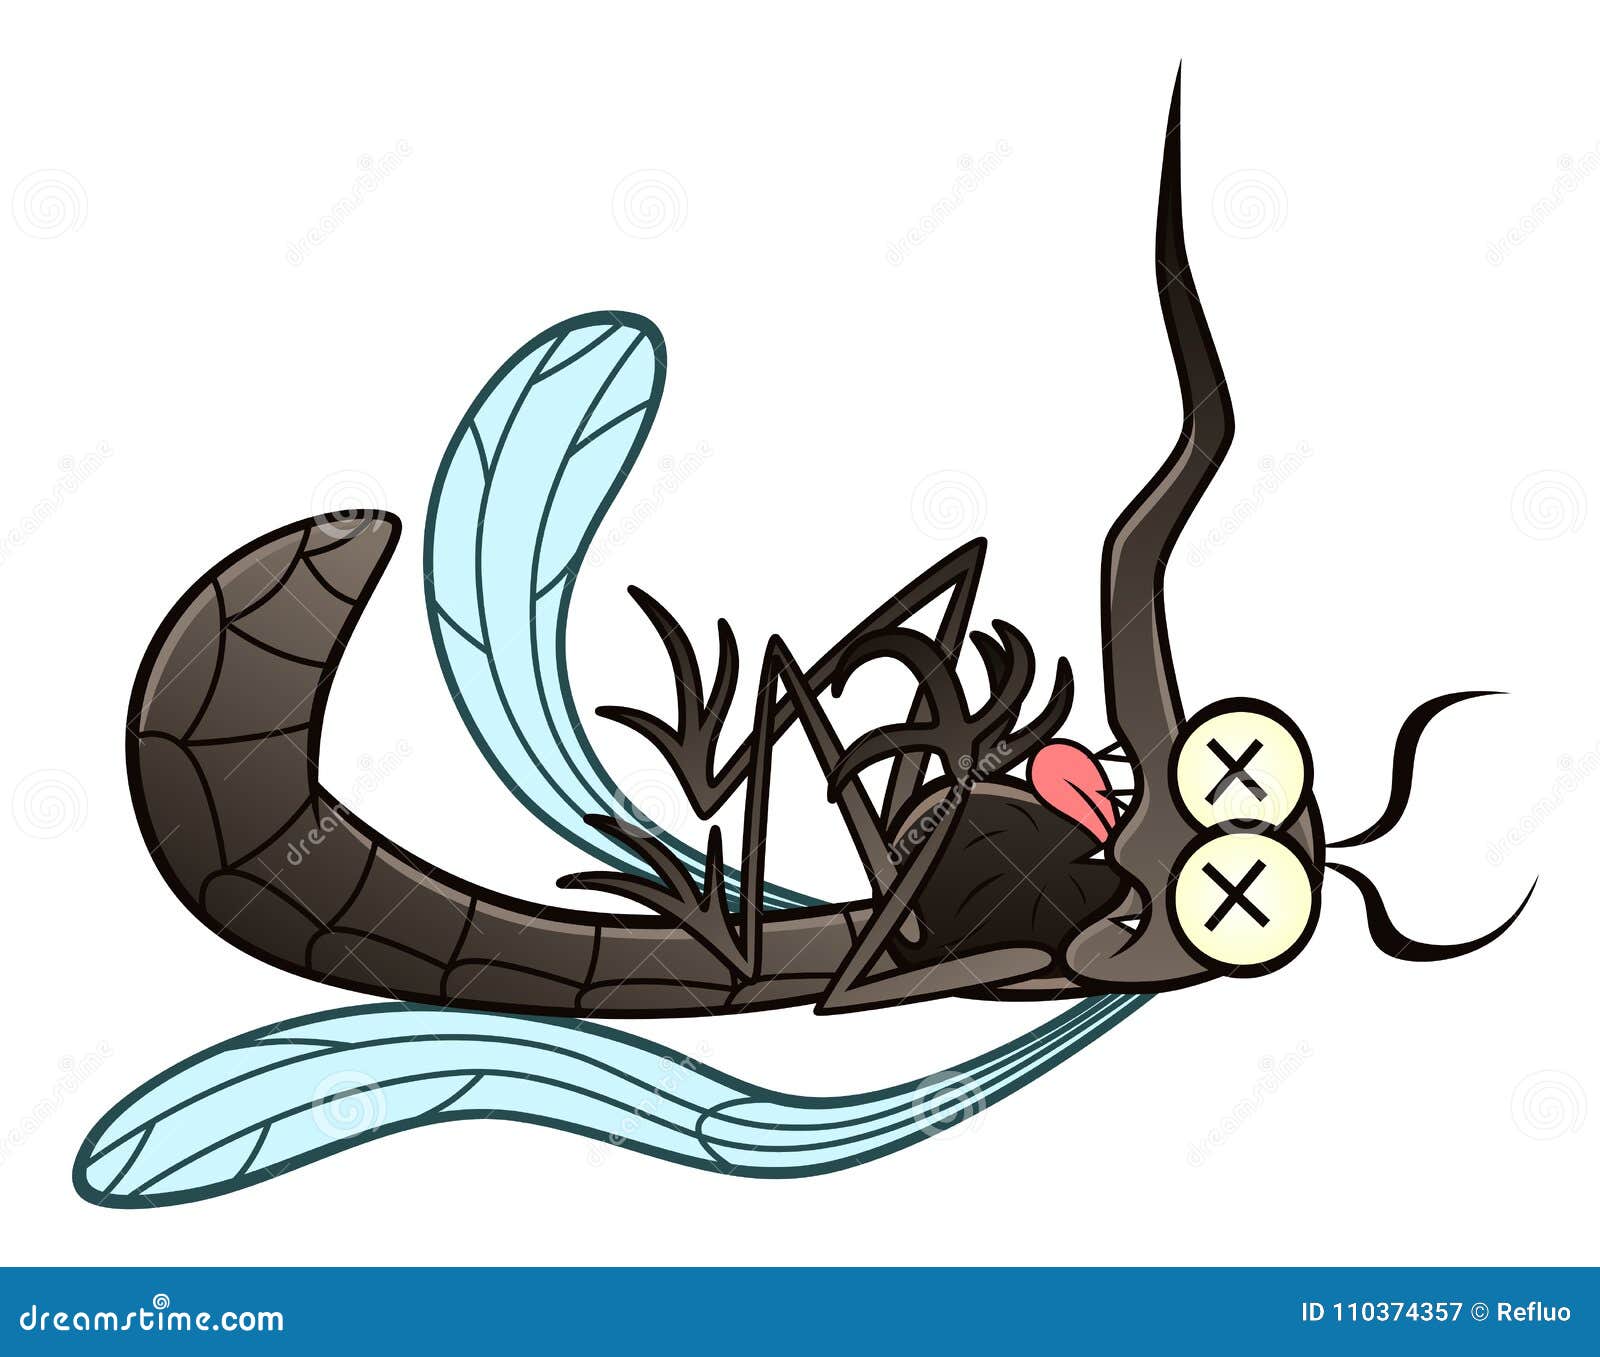 Dead mosquito stock vector. Illustration of cartoon - 110374357